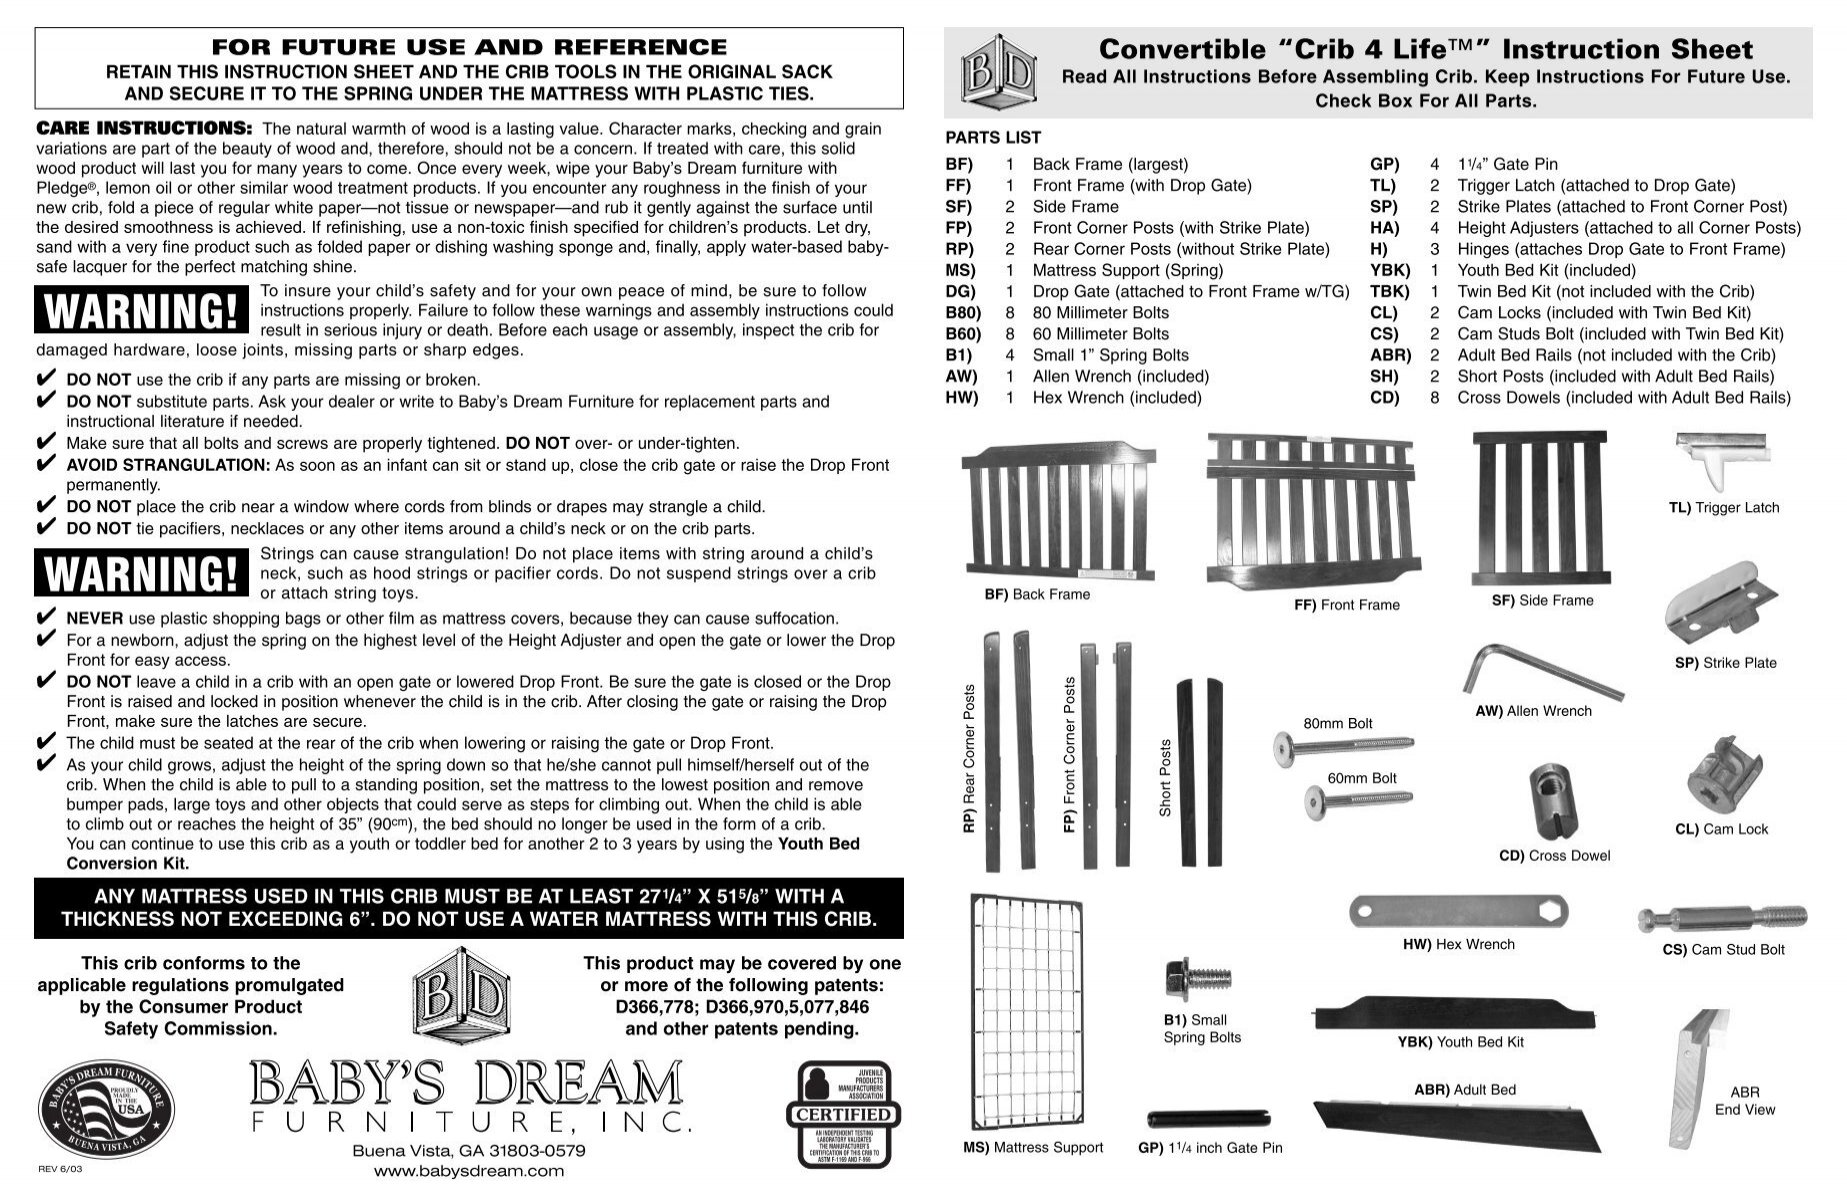 Convertible Crib 4 Lifea Instruction Sheet Baby S Dream